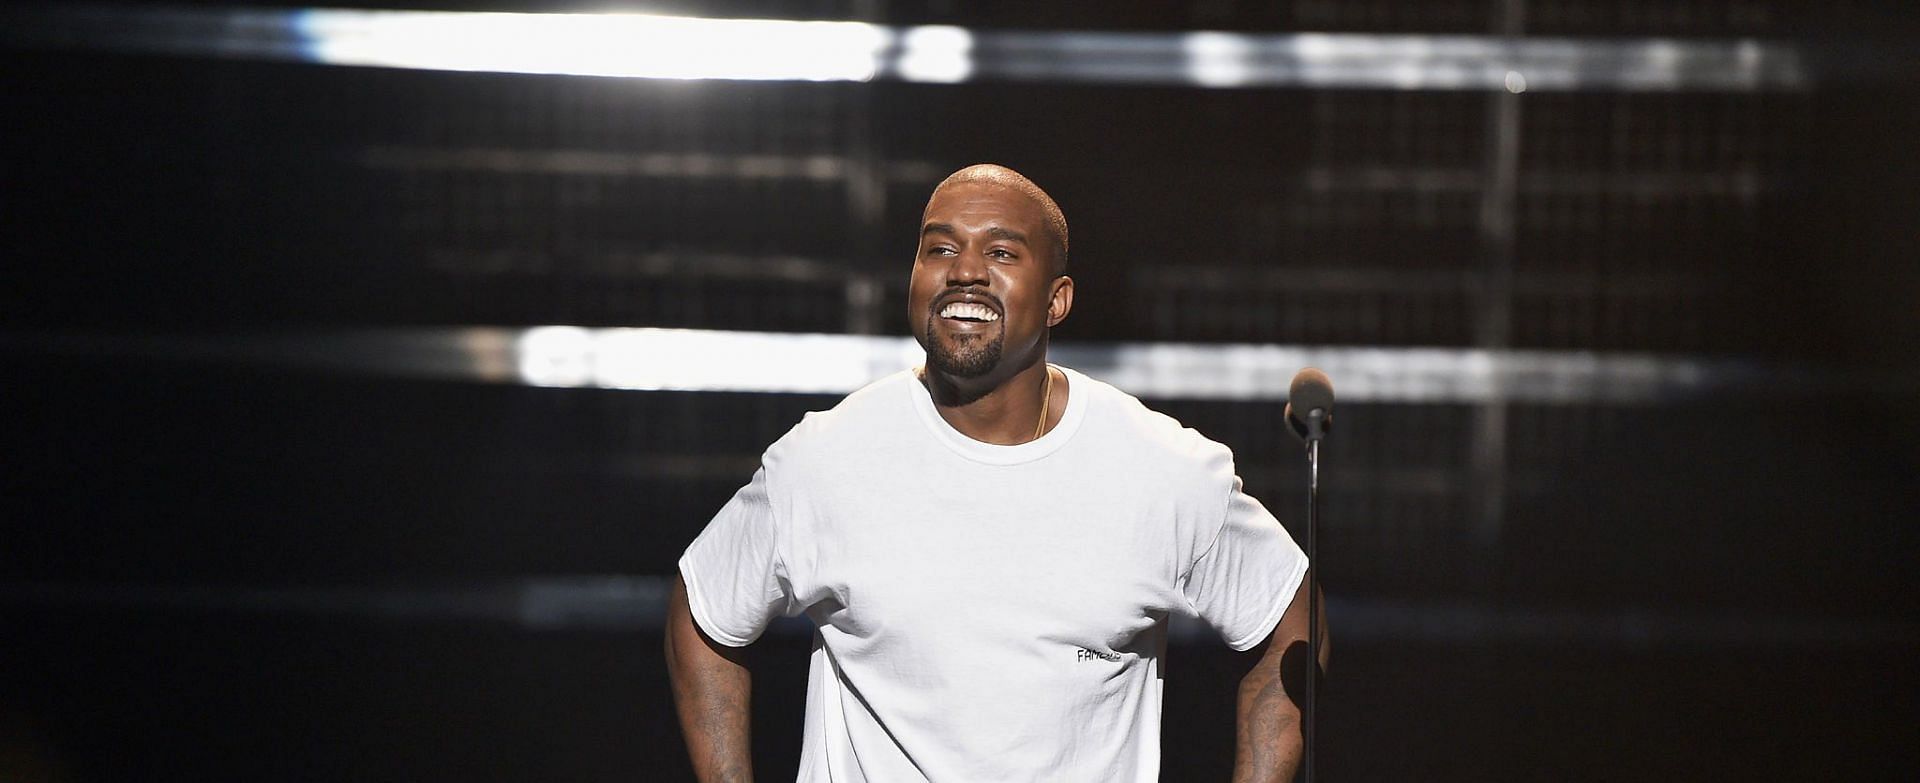 Kanye West&#039;s Star of David with Swastika logo sparked debate online (Image via Getty Images)